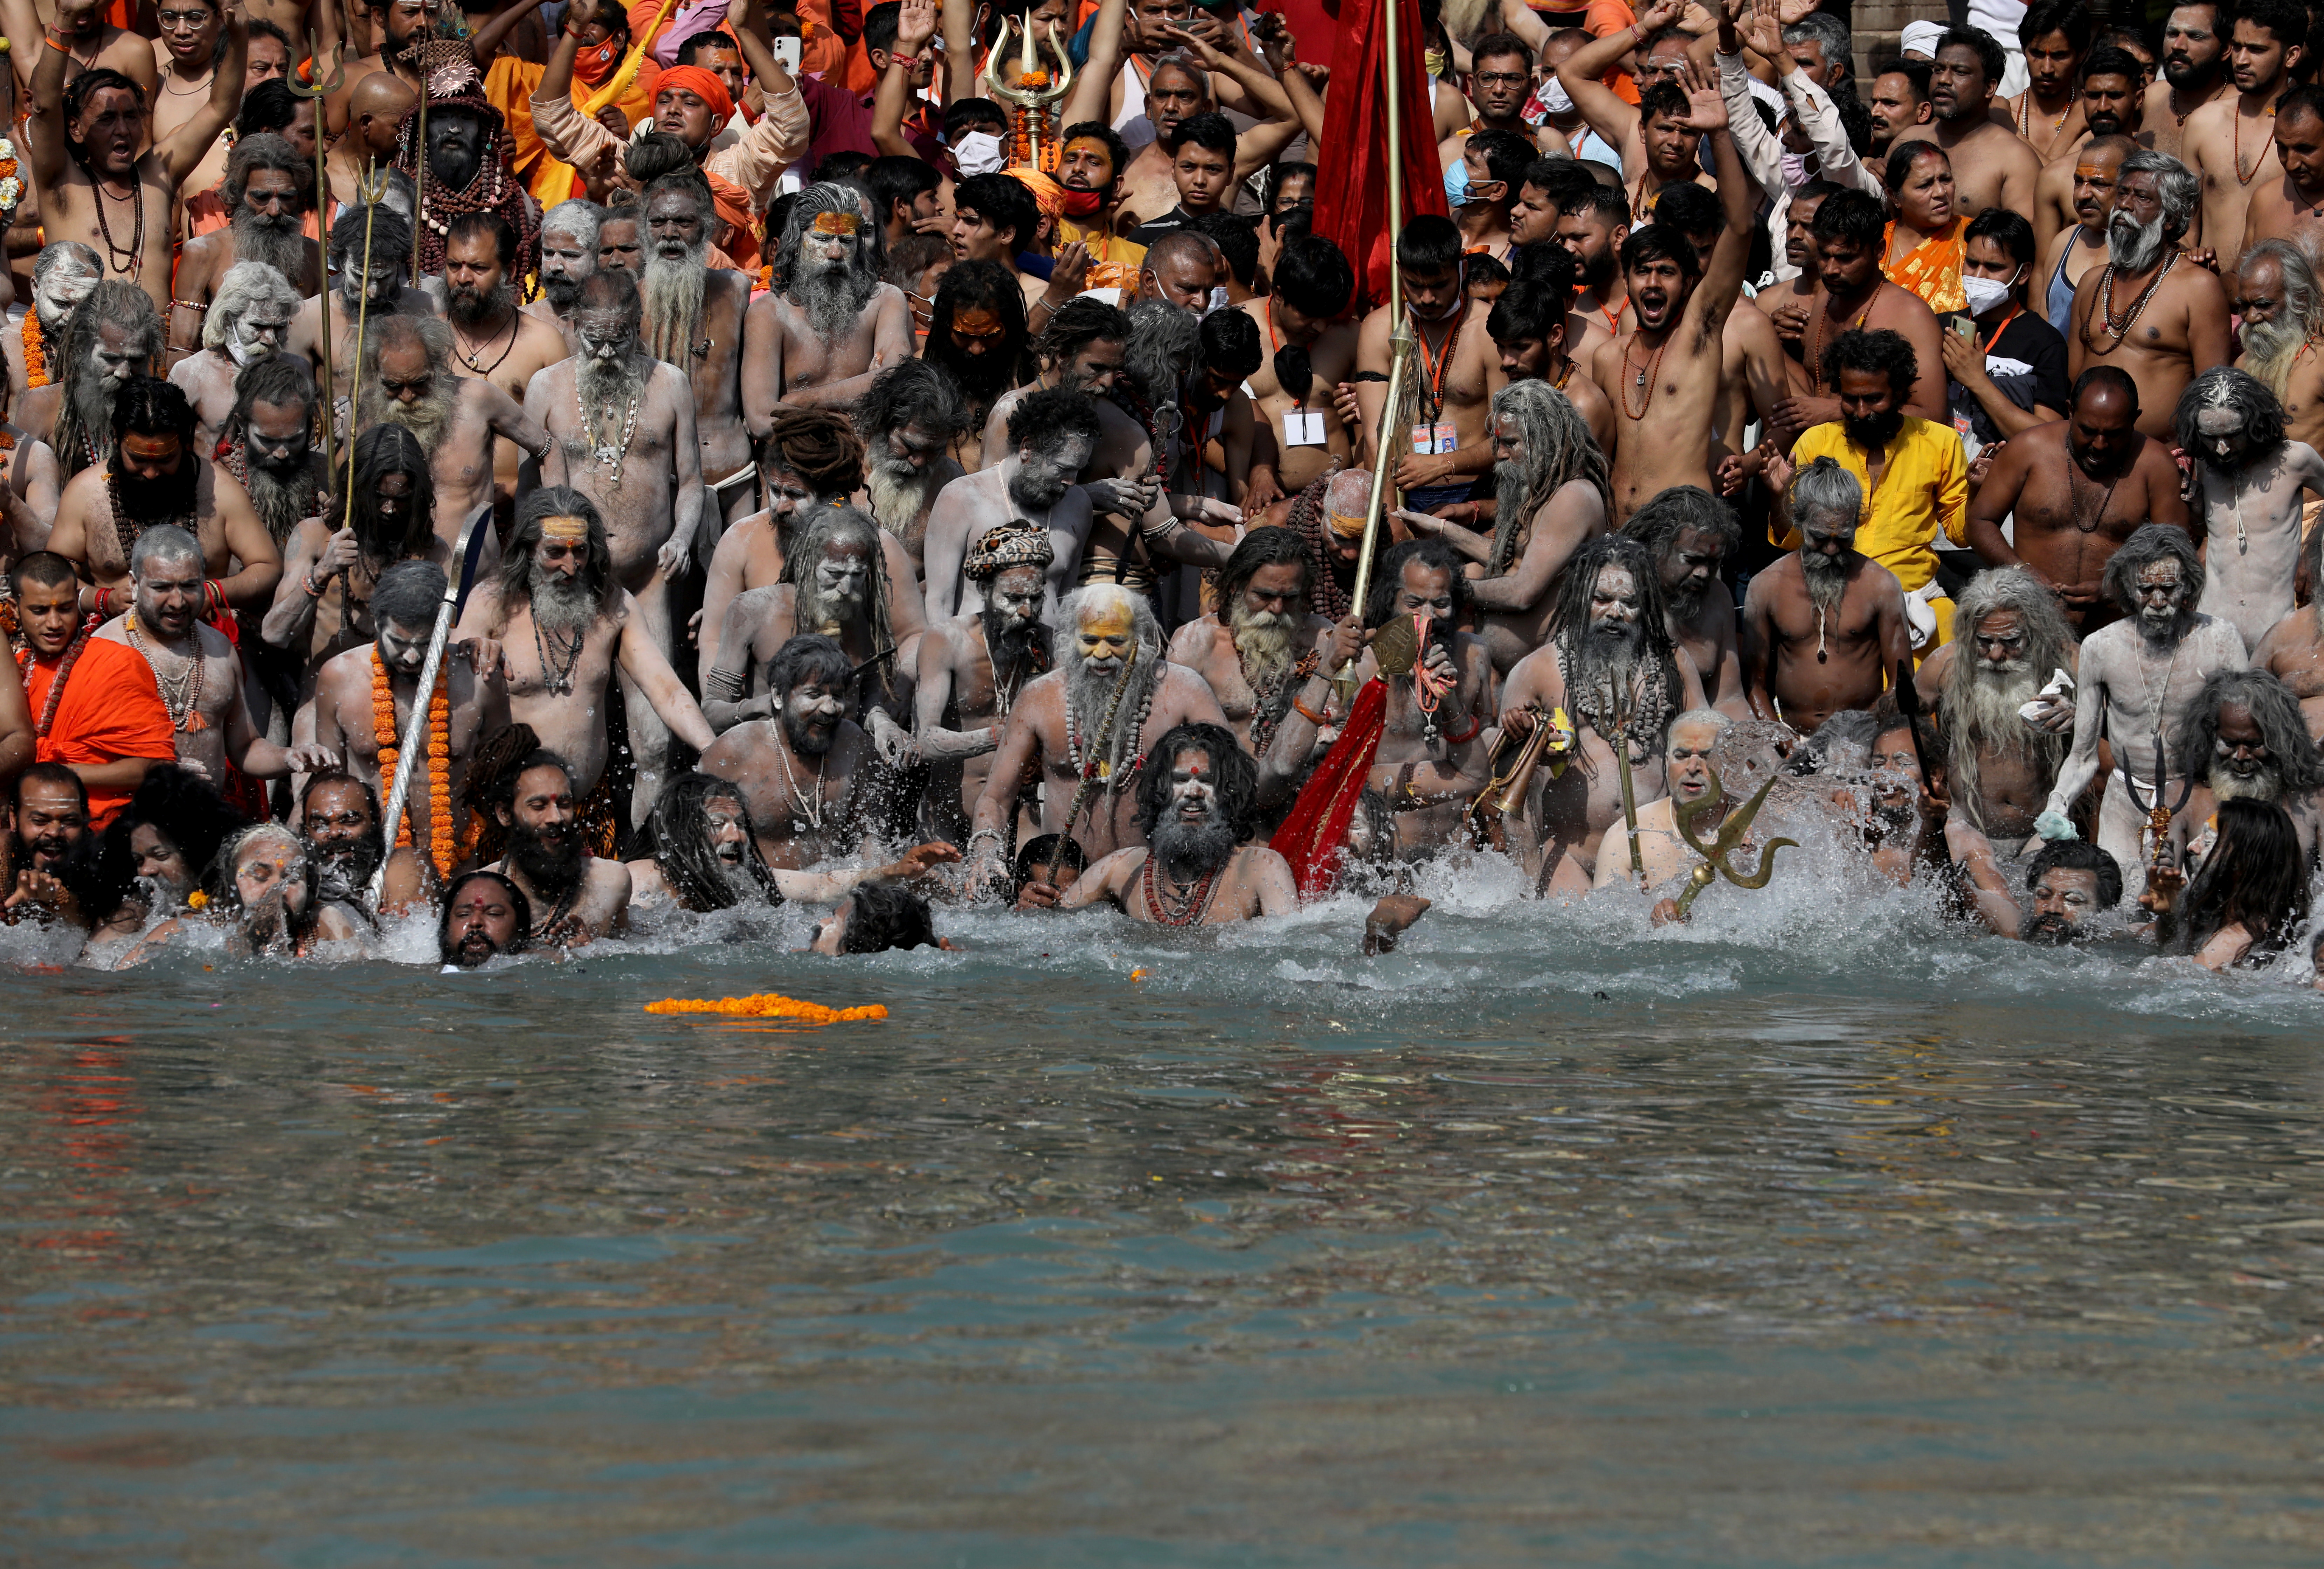 El festival hindú más popular se realiza en el río Ganges, donde se bañan miles de fieles (REUTERS/Anushree Fadnavis)